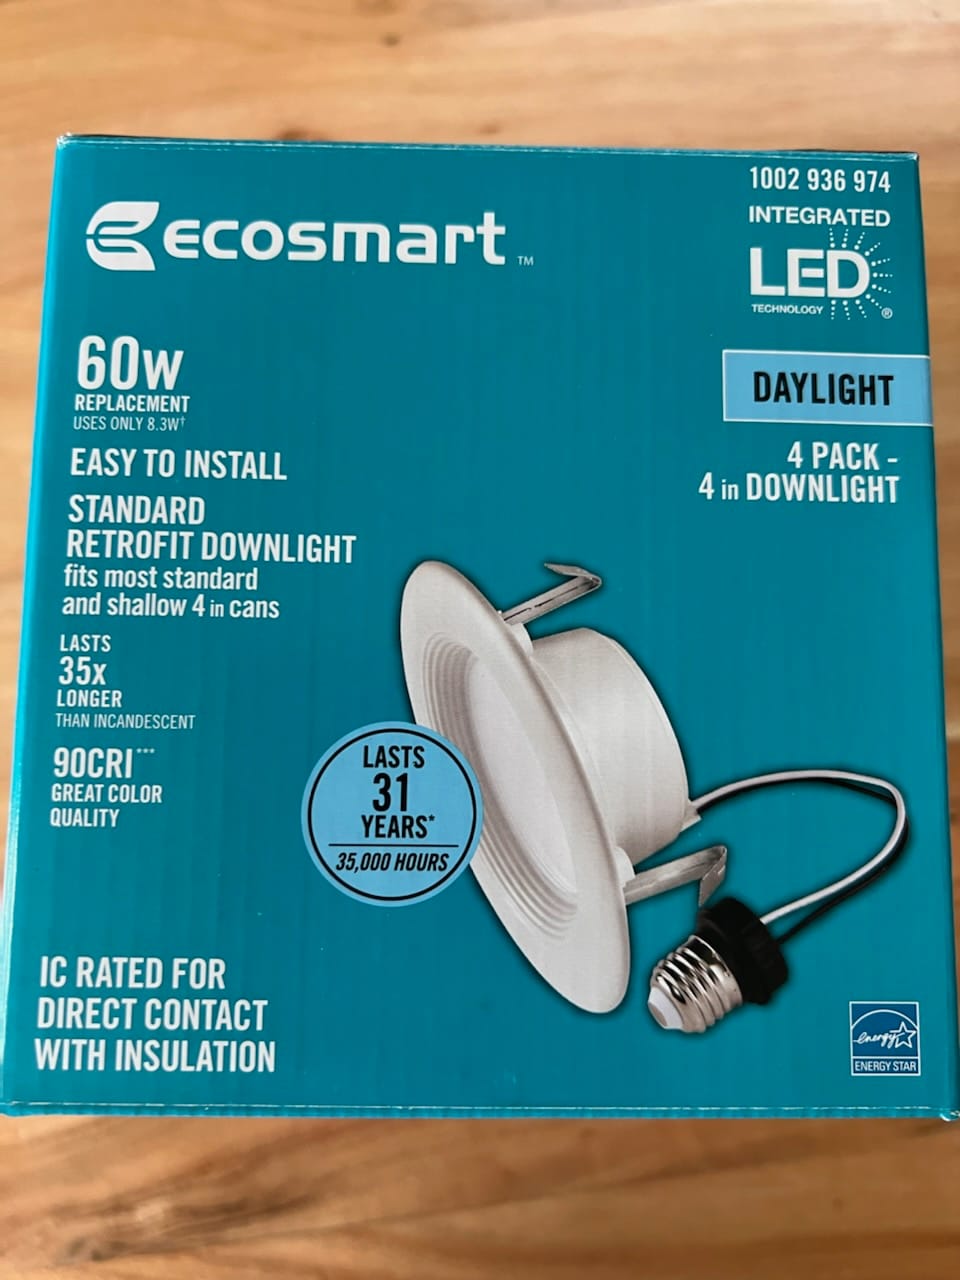 46545 - Ecosmart 60W Daylight LED Light Bulb USA